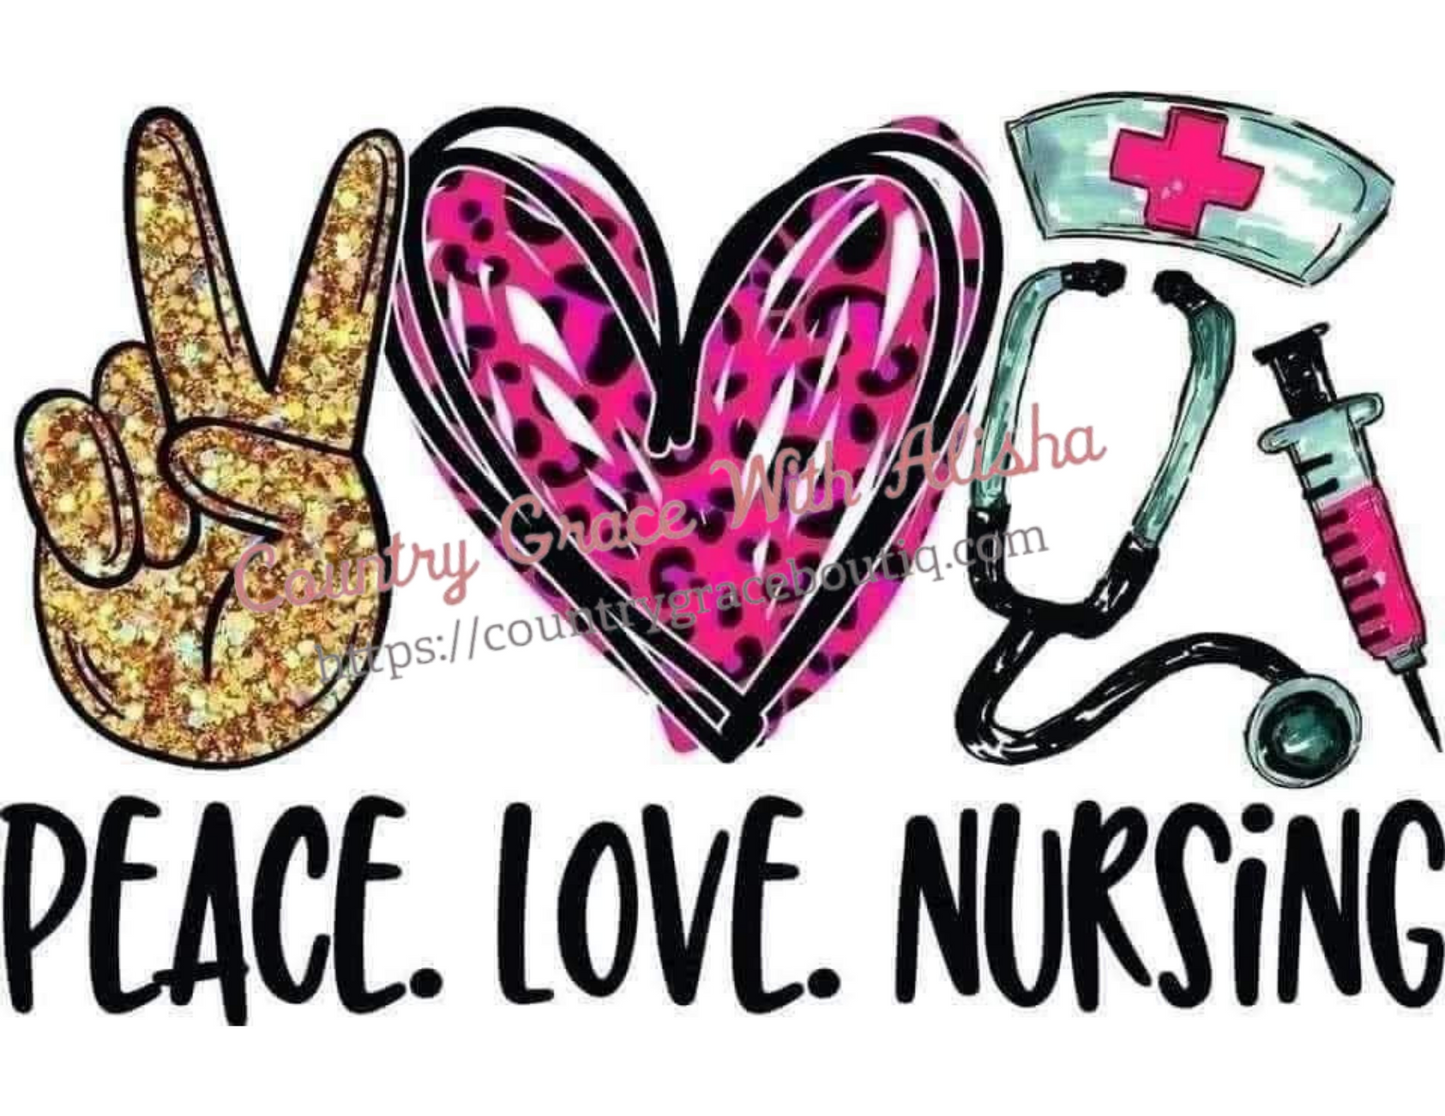 Peace Love Nursing Ready To Press Sublimation Transfer